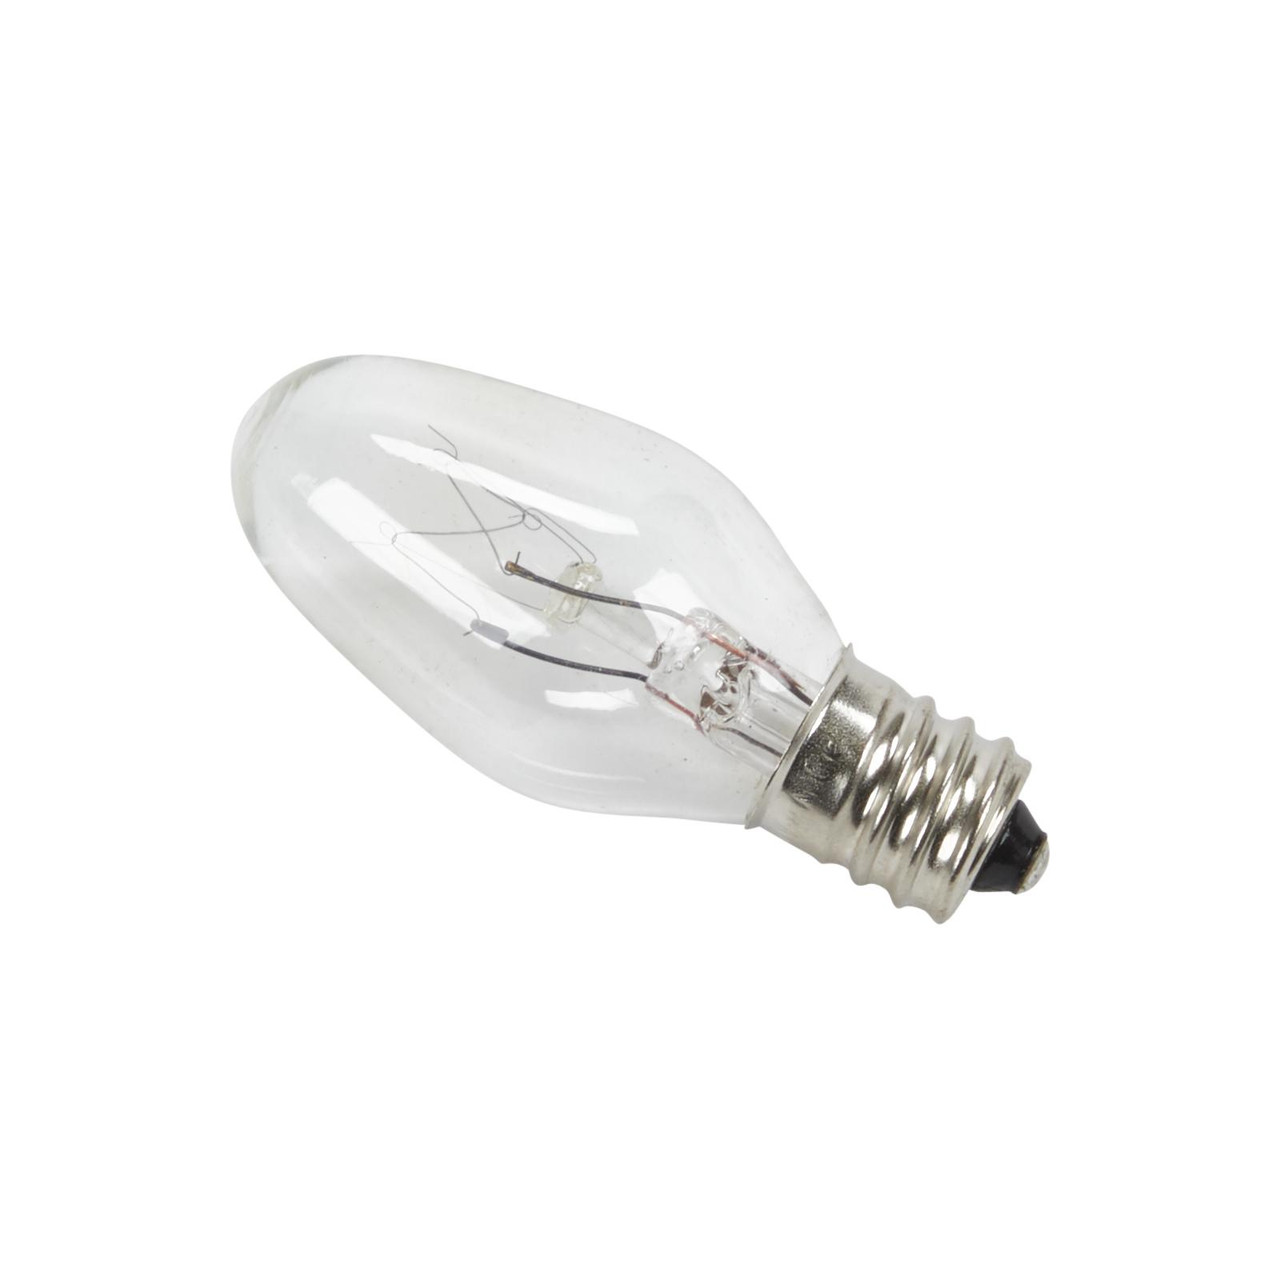 Whirlpool WP22002263 - Appliance Light Bulb